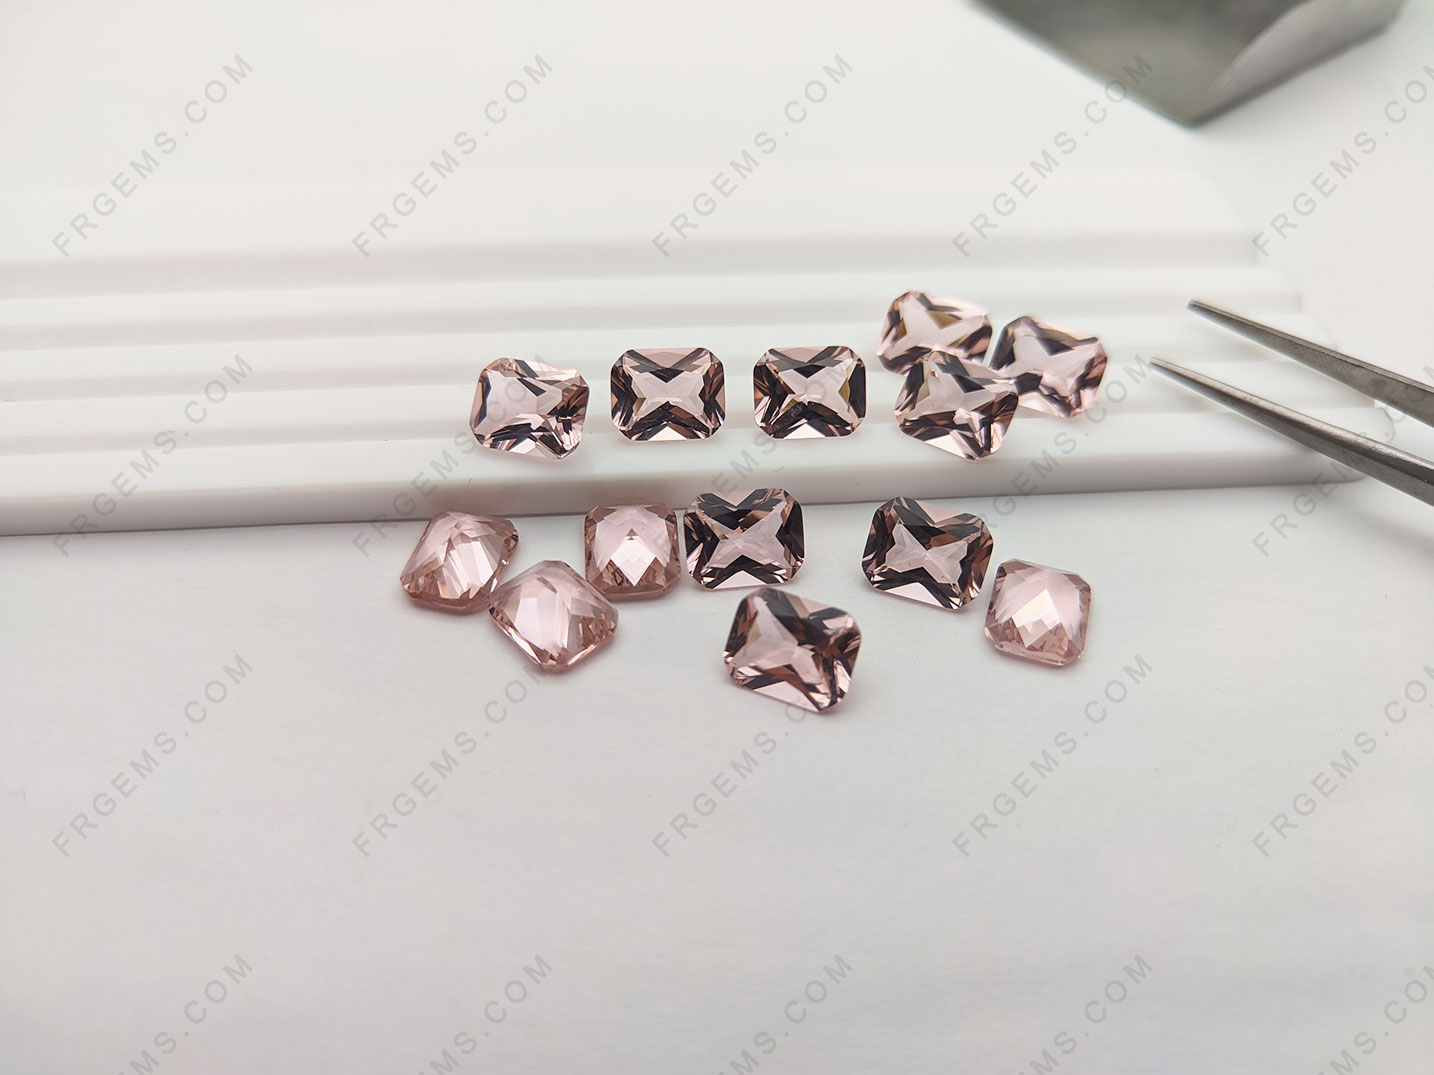 Loose Nano Crystal morganite Pink peach color Octagon Shape Radiant 10x8mm faceted cut gemstones